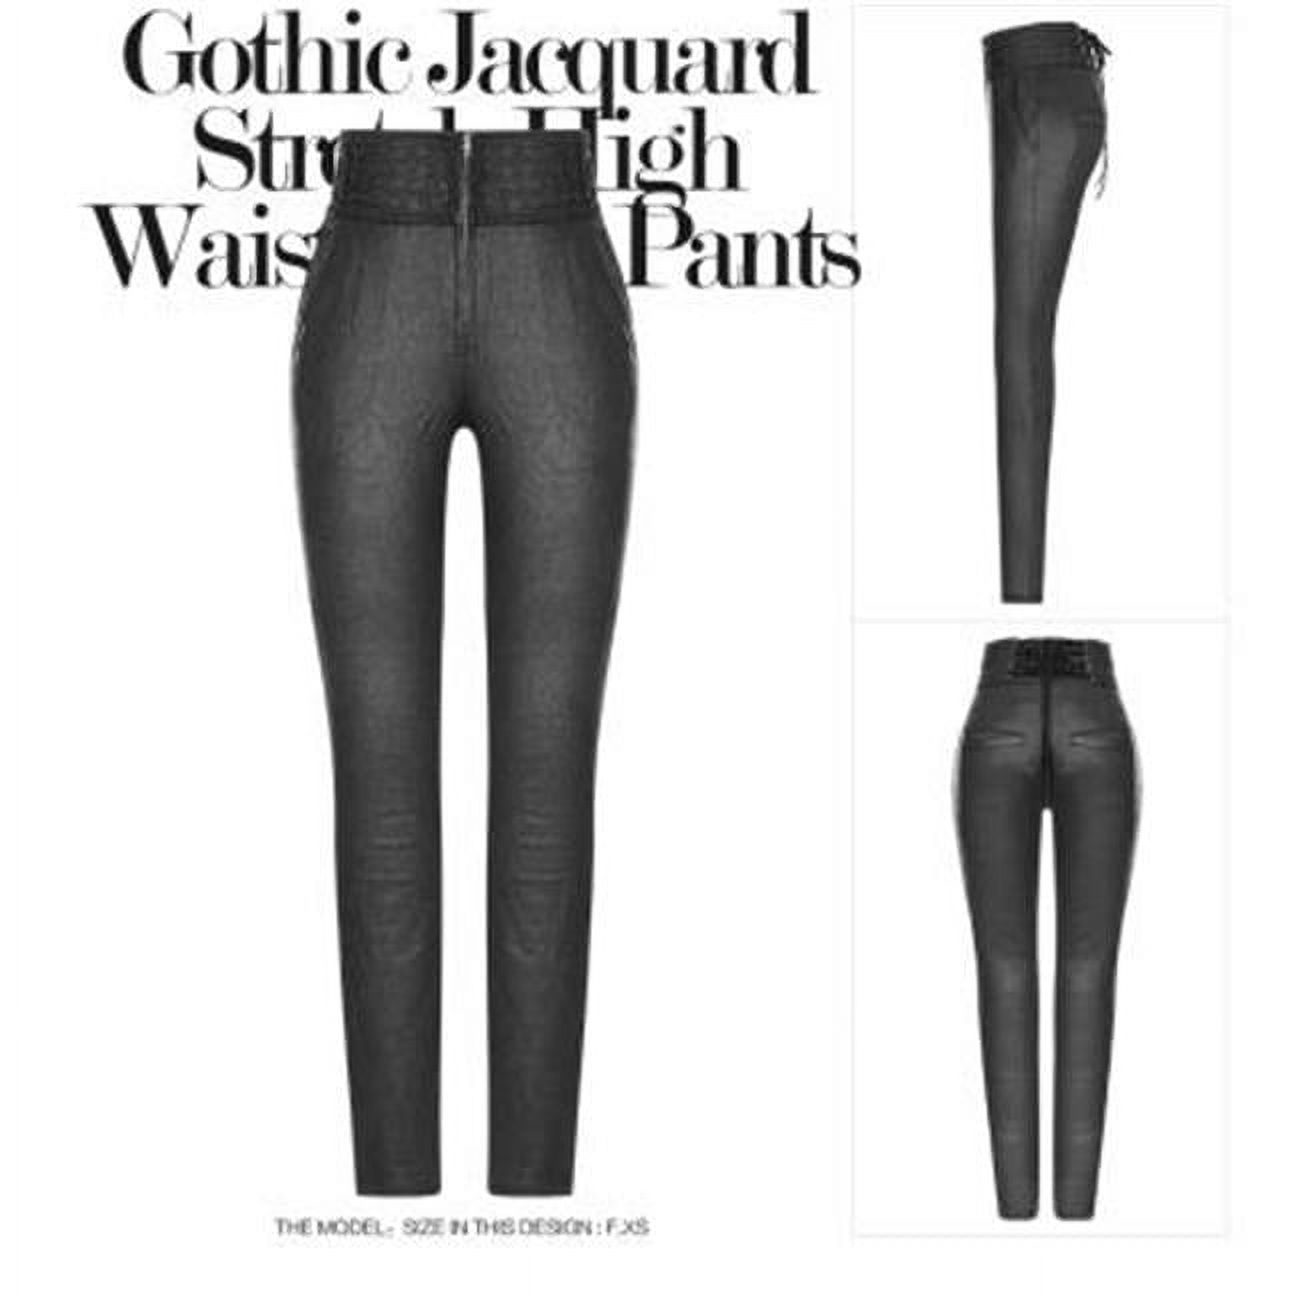 Western Fashion WK330-XL Gothic Jacquard Stretch Hi-Waist Tight Pants&#44; Black - Extra Large - image 1 of 1